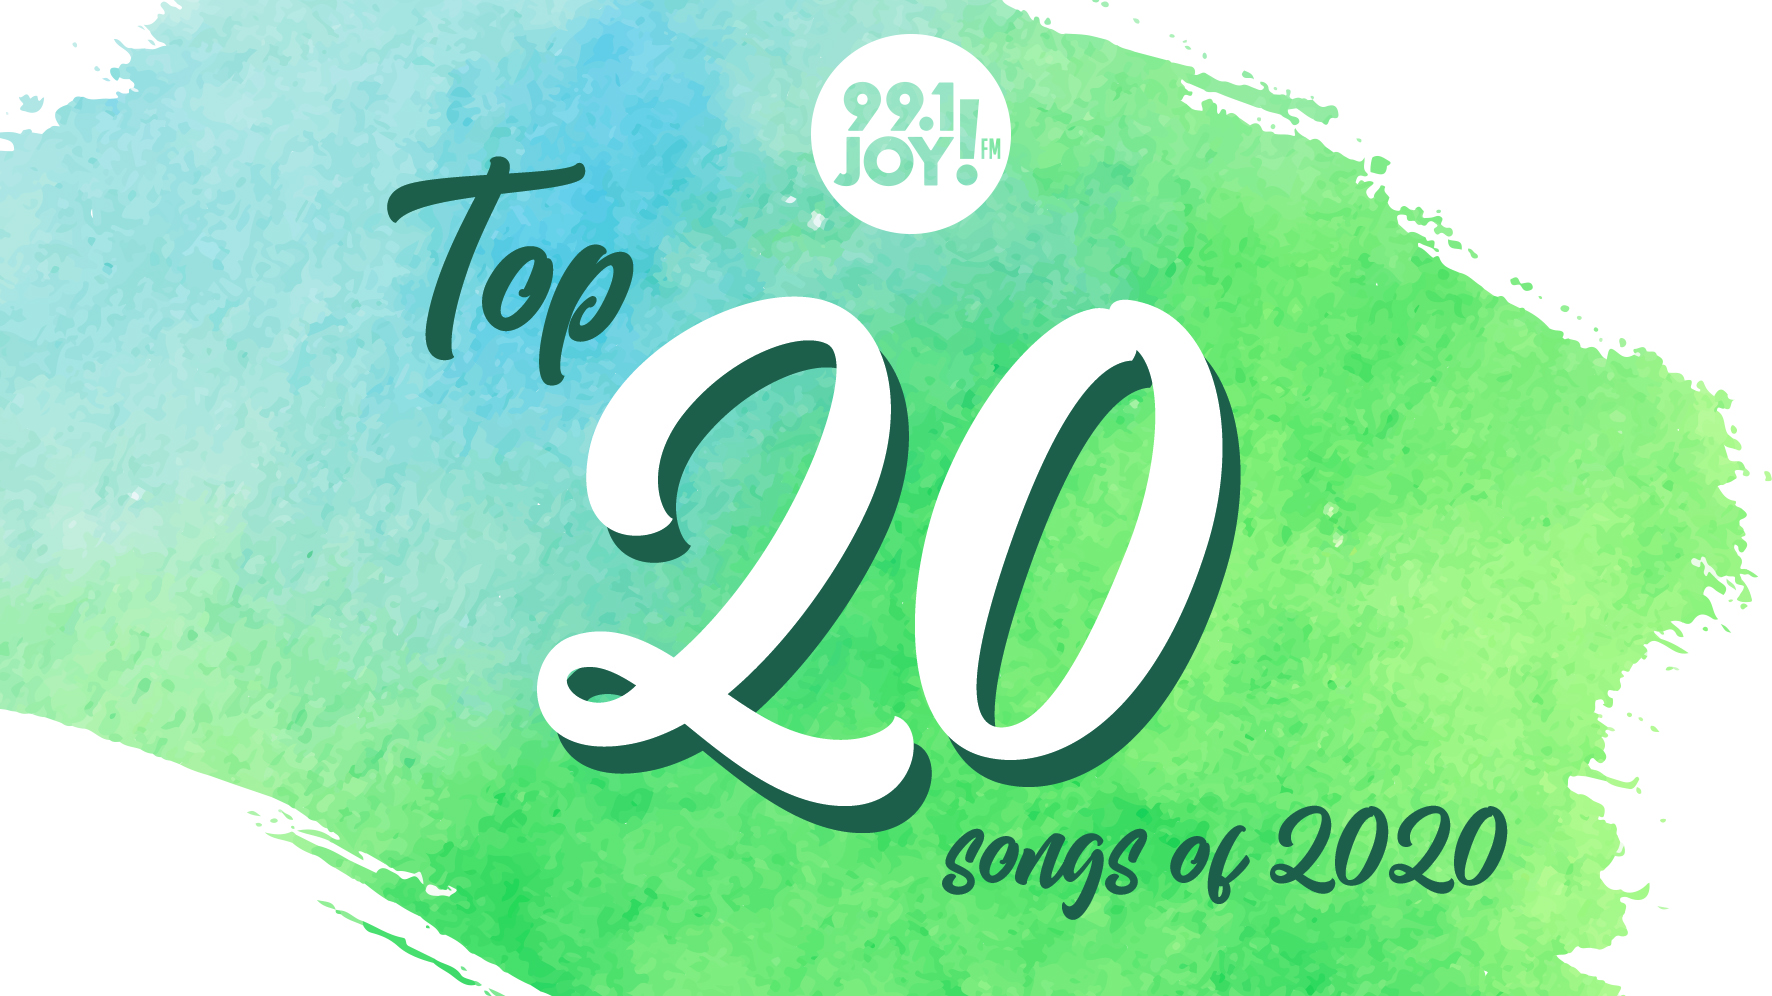 JOY FM’s Top 20 Songs of 2020